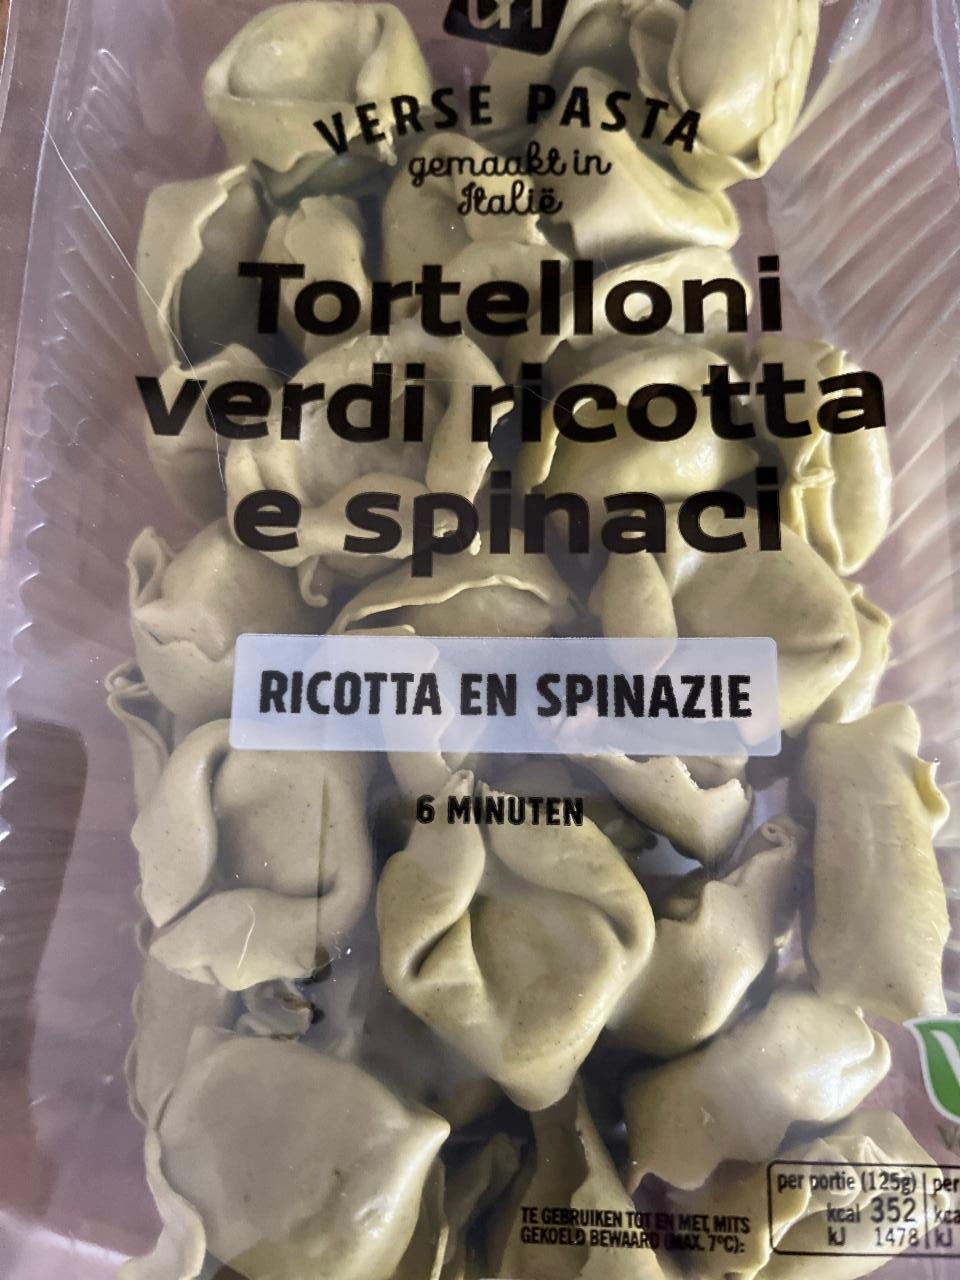 Fotografie - Verse Pasta Tortelloni verdi ricotta e spinaci AH